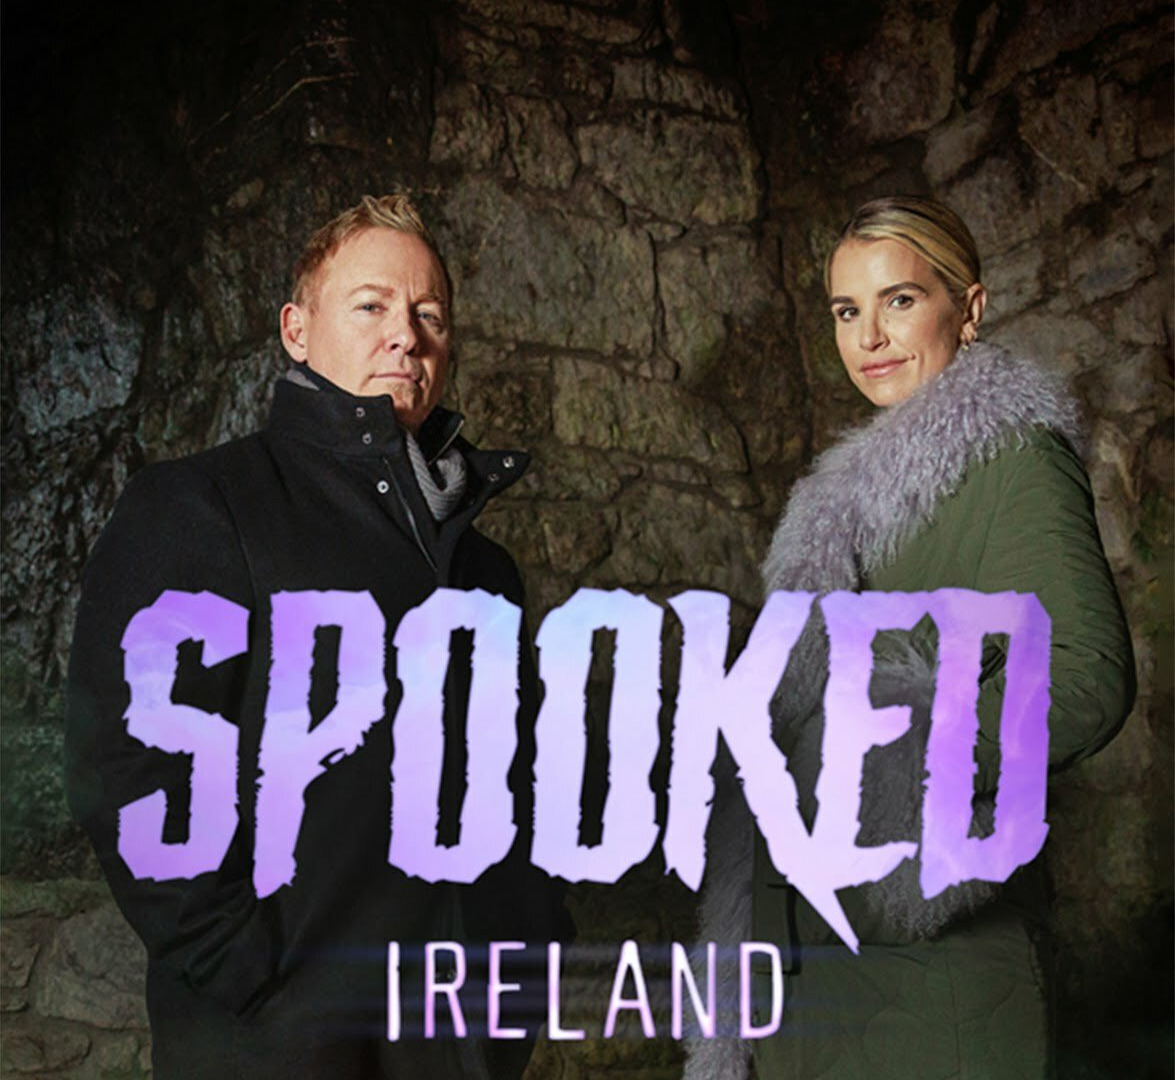 Show Spooked Ireland